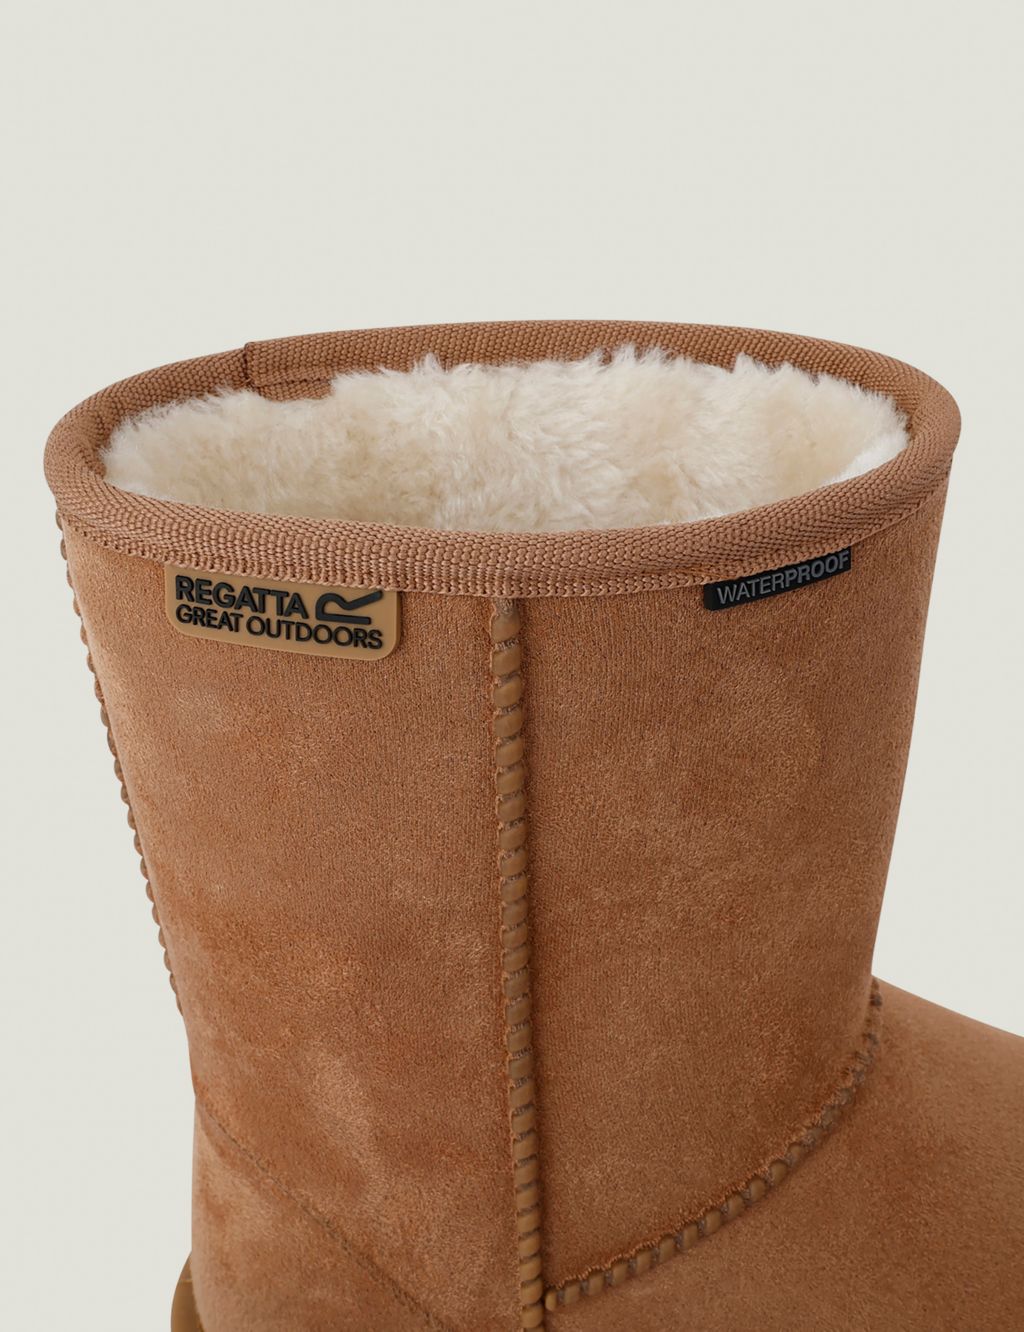 Risley Waterproof Boots image 5